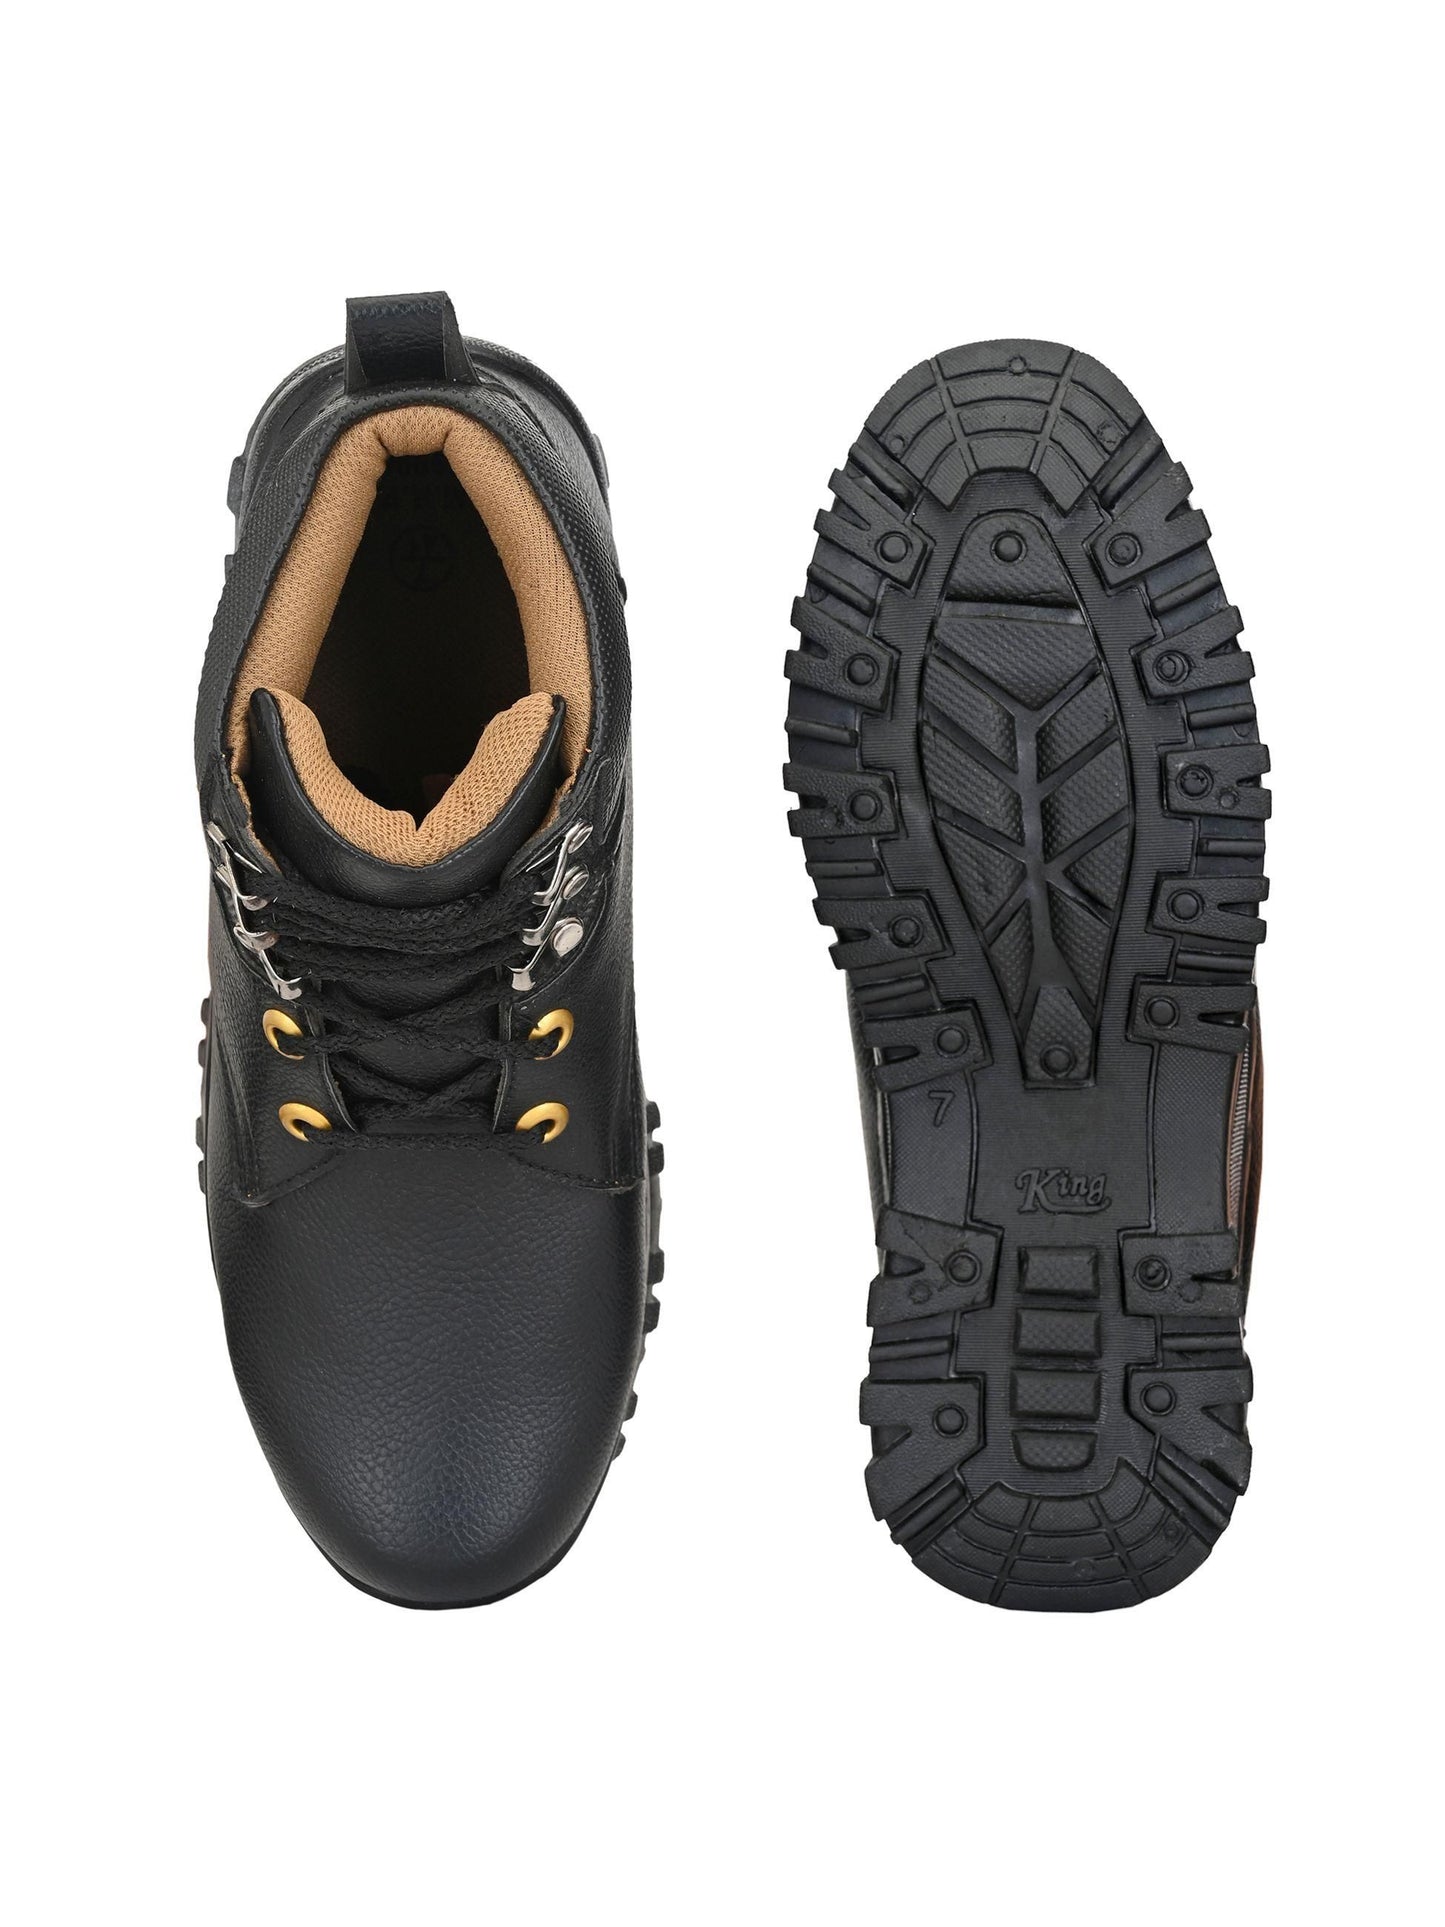 Bucik Men's Black Synthetic Leather Lace-Up Casual Shoes